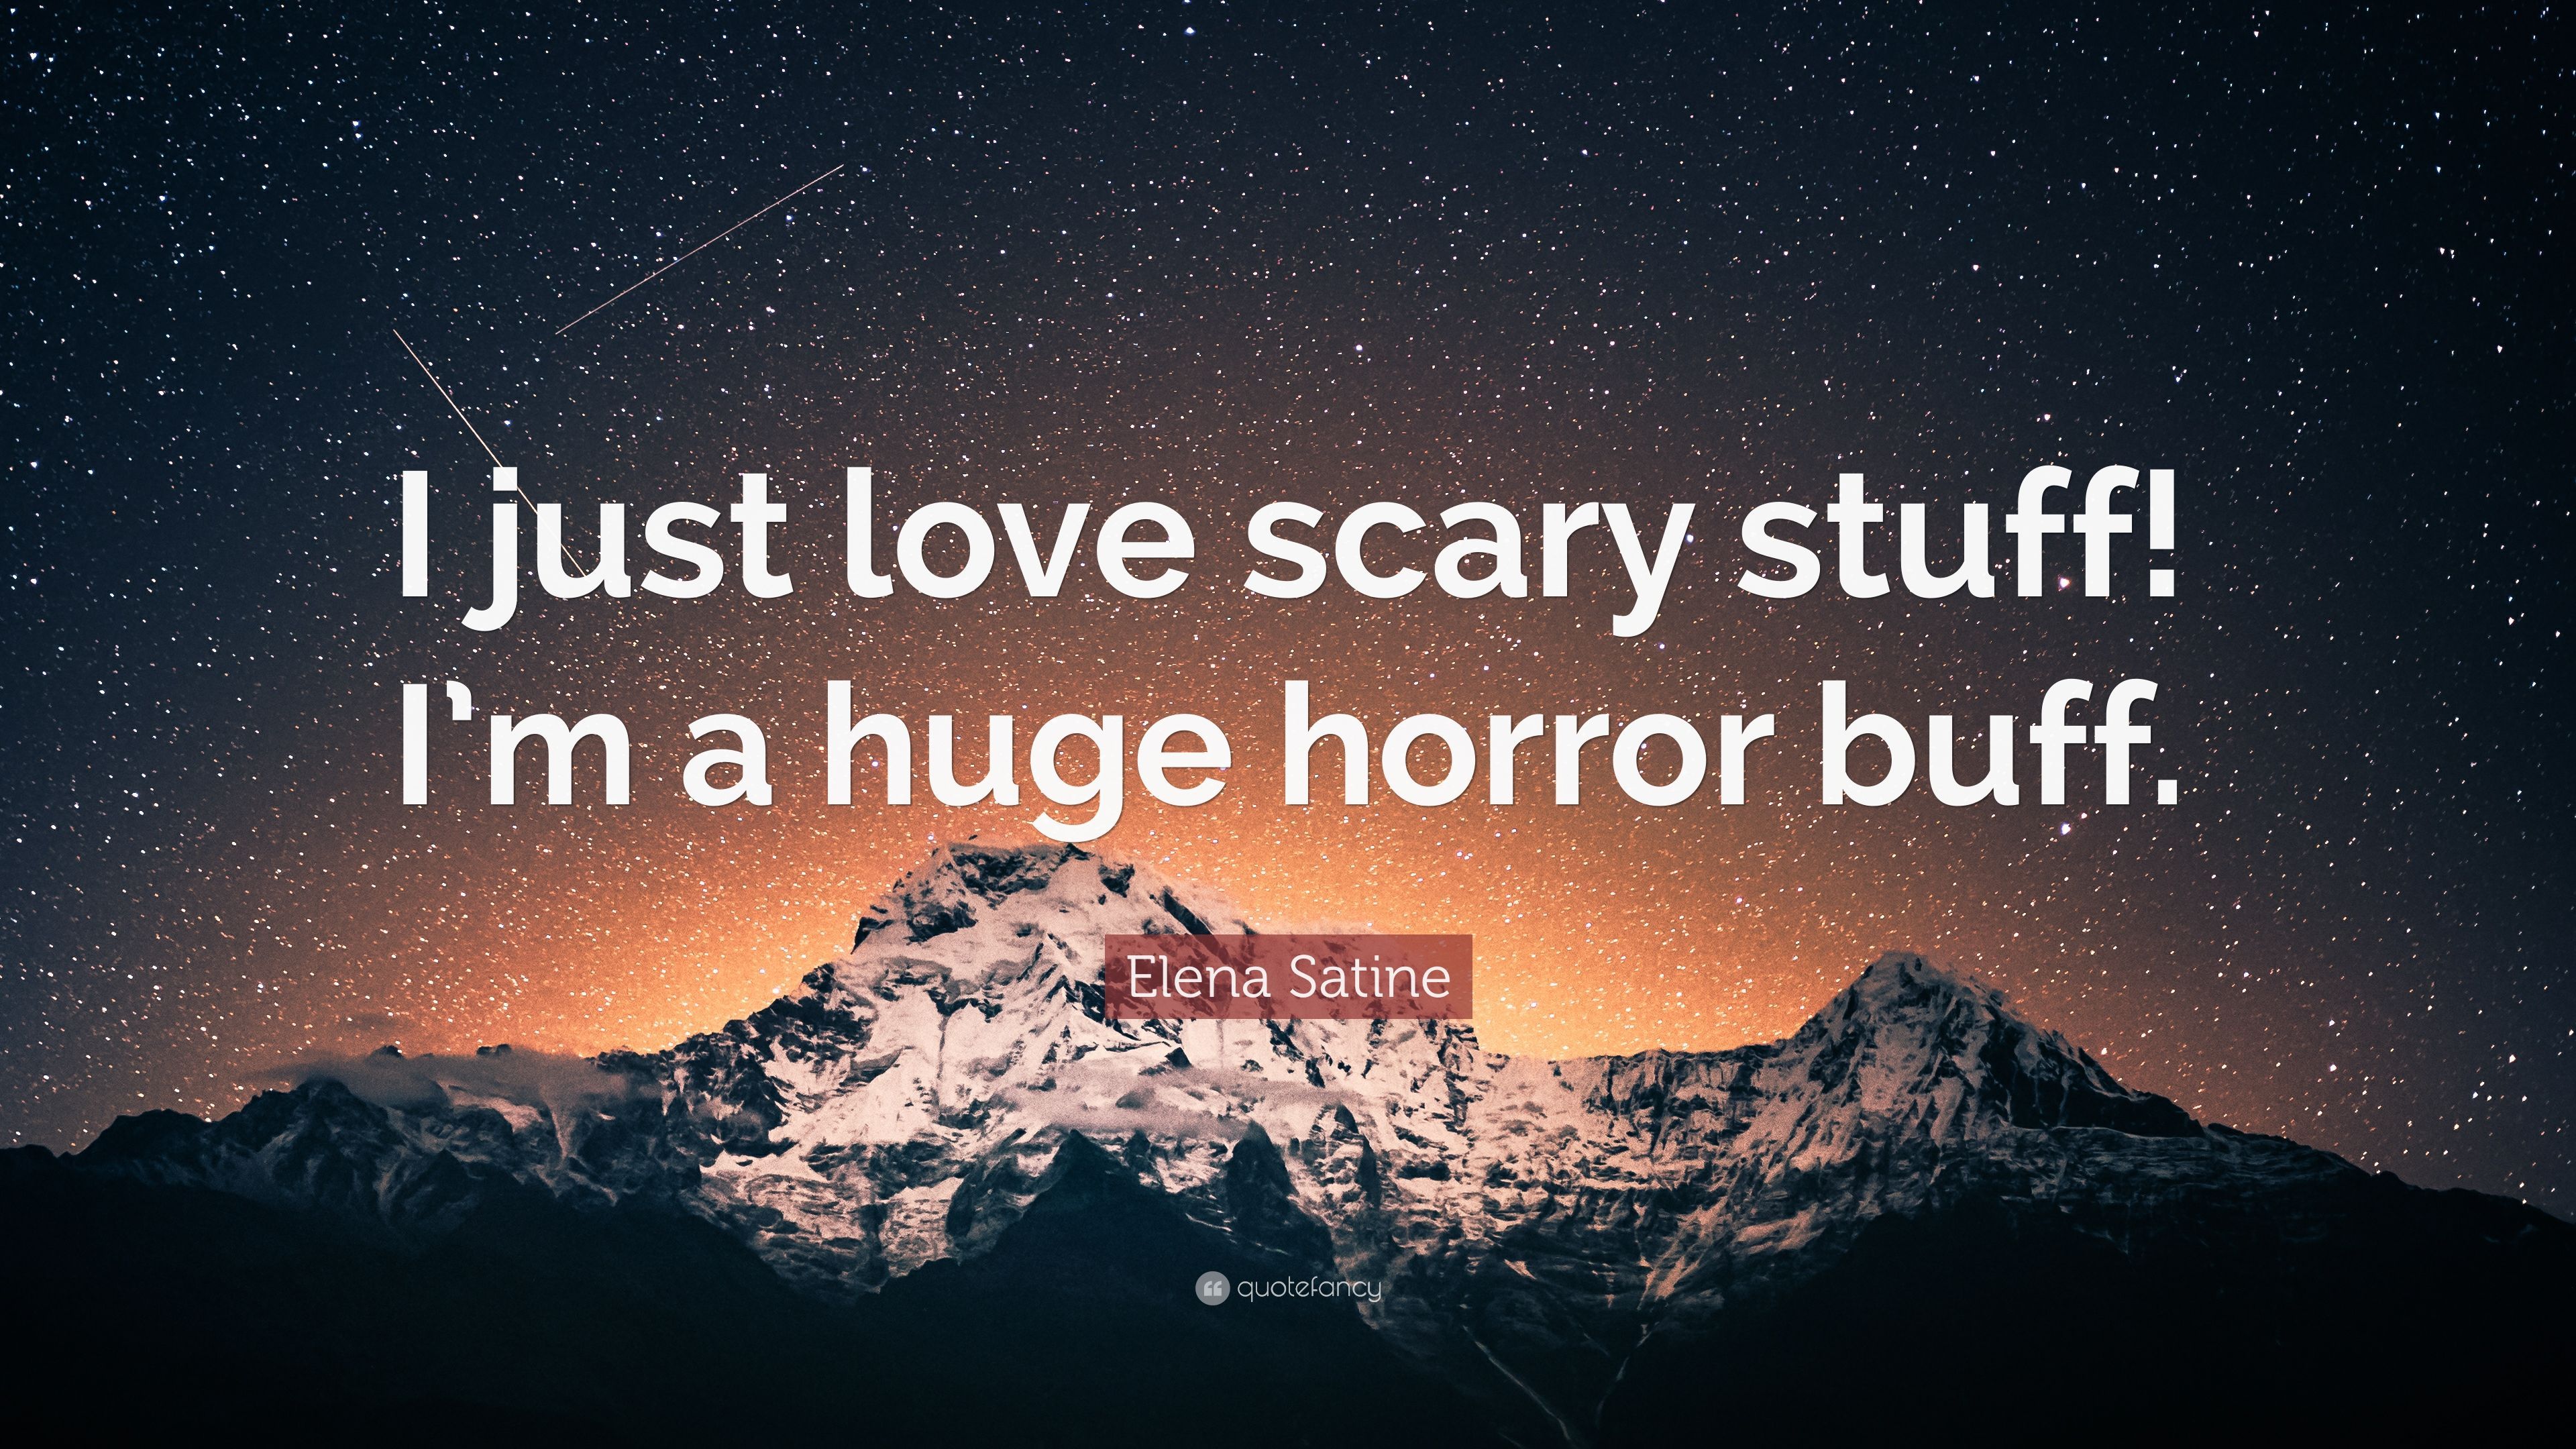 Elena Satine Quote: “I just love scary stuff! I'm a huge horror